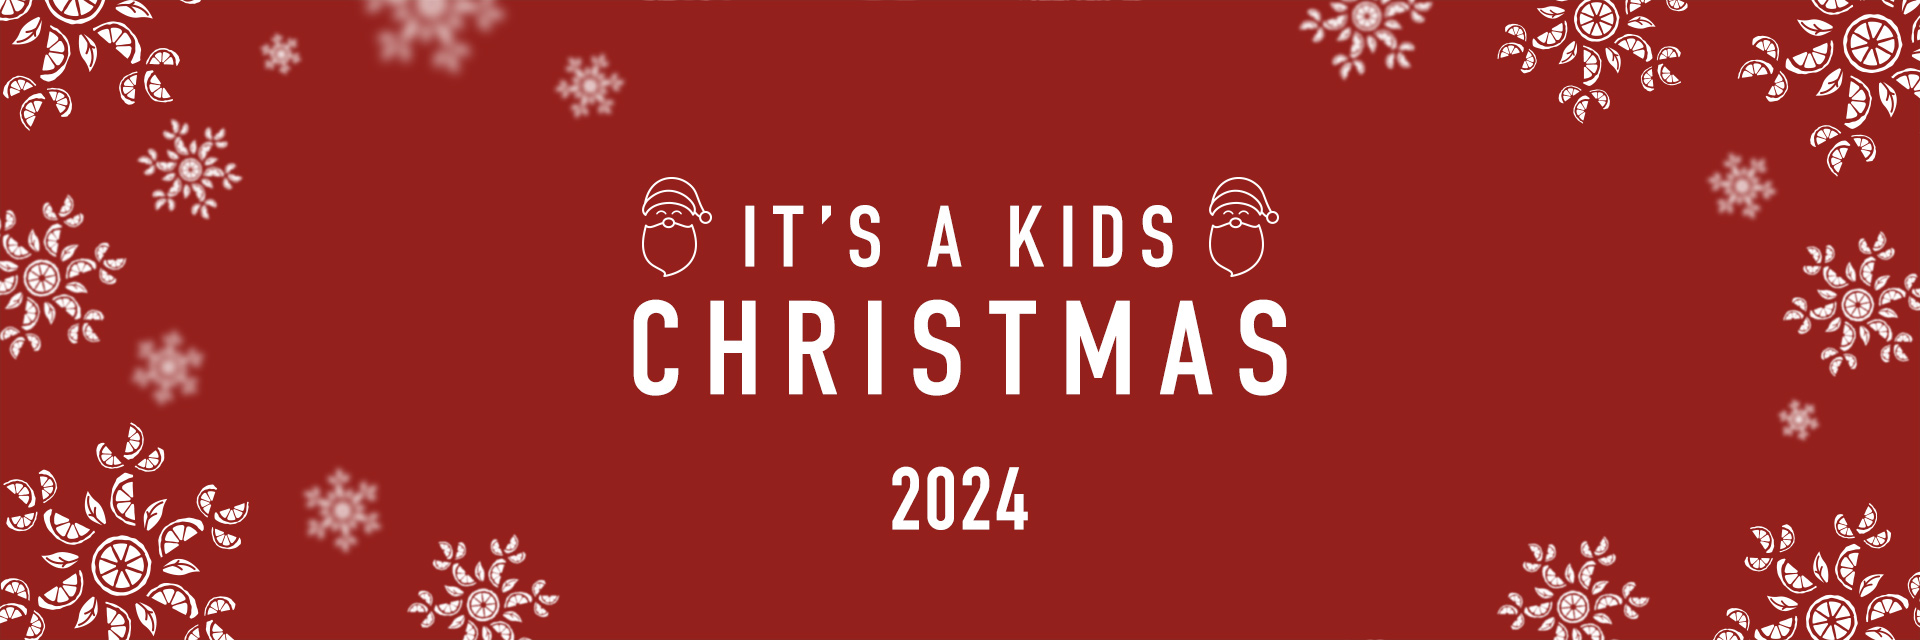 Kids Christmas Menu 2024 at YEOMAN WEST BYFLEET